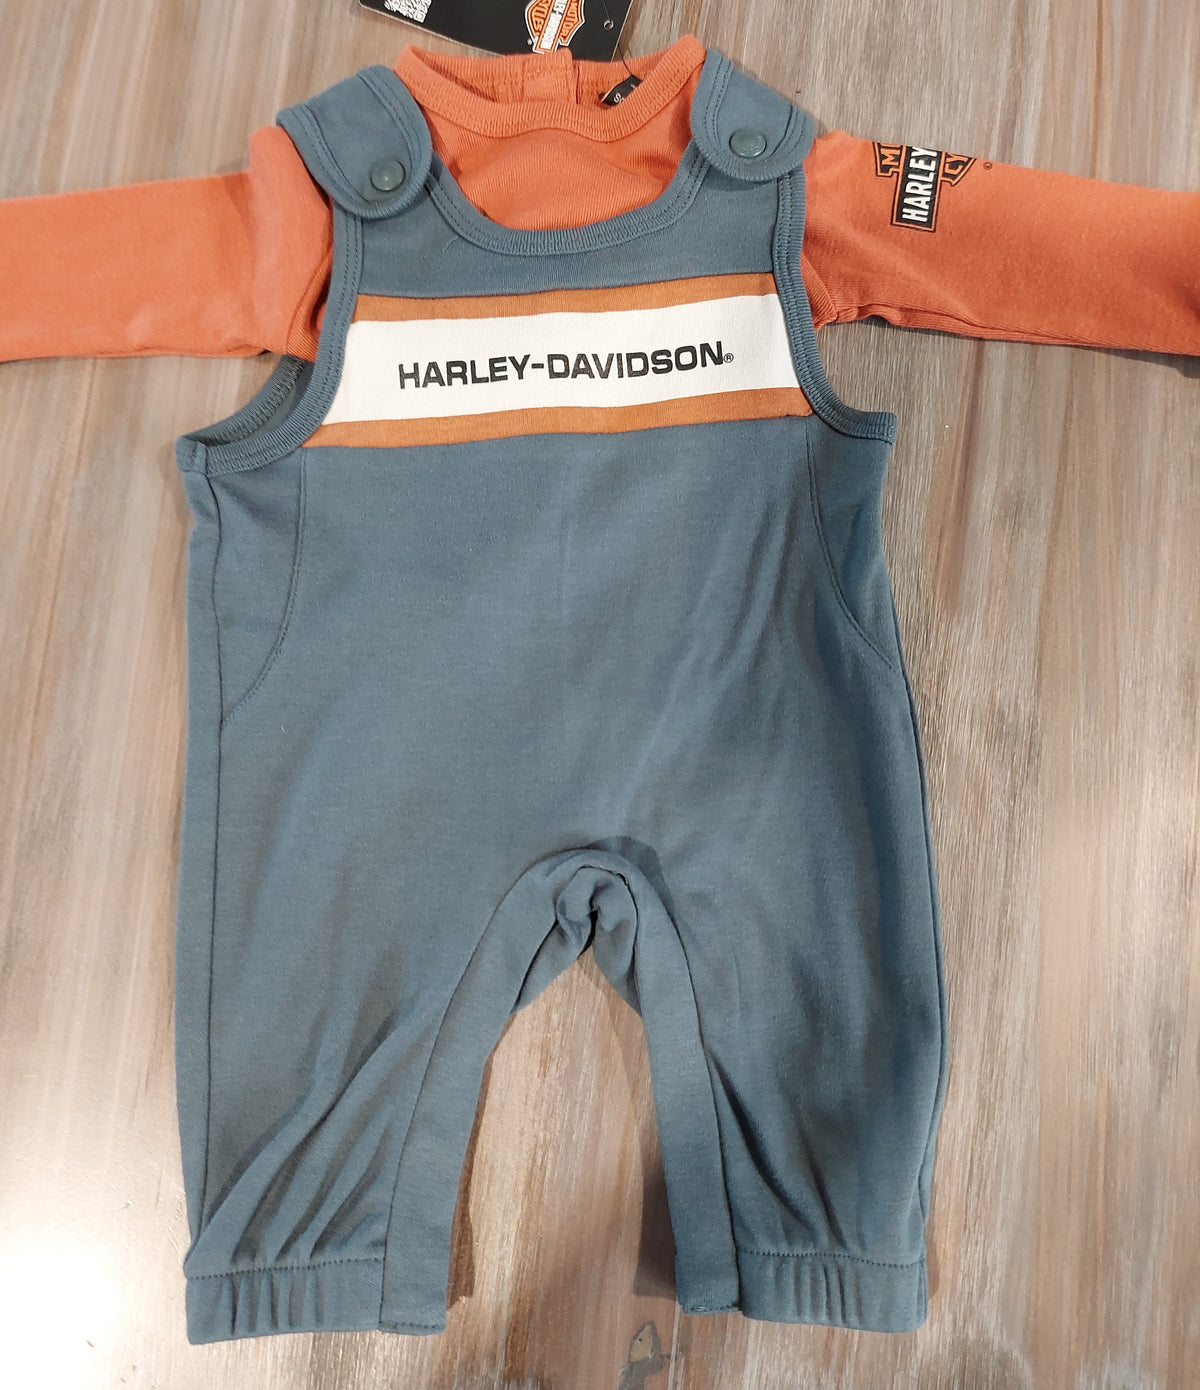 Harley-Davidson Newborn Boys Overall set